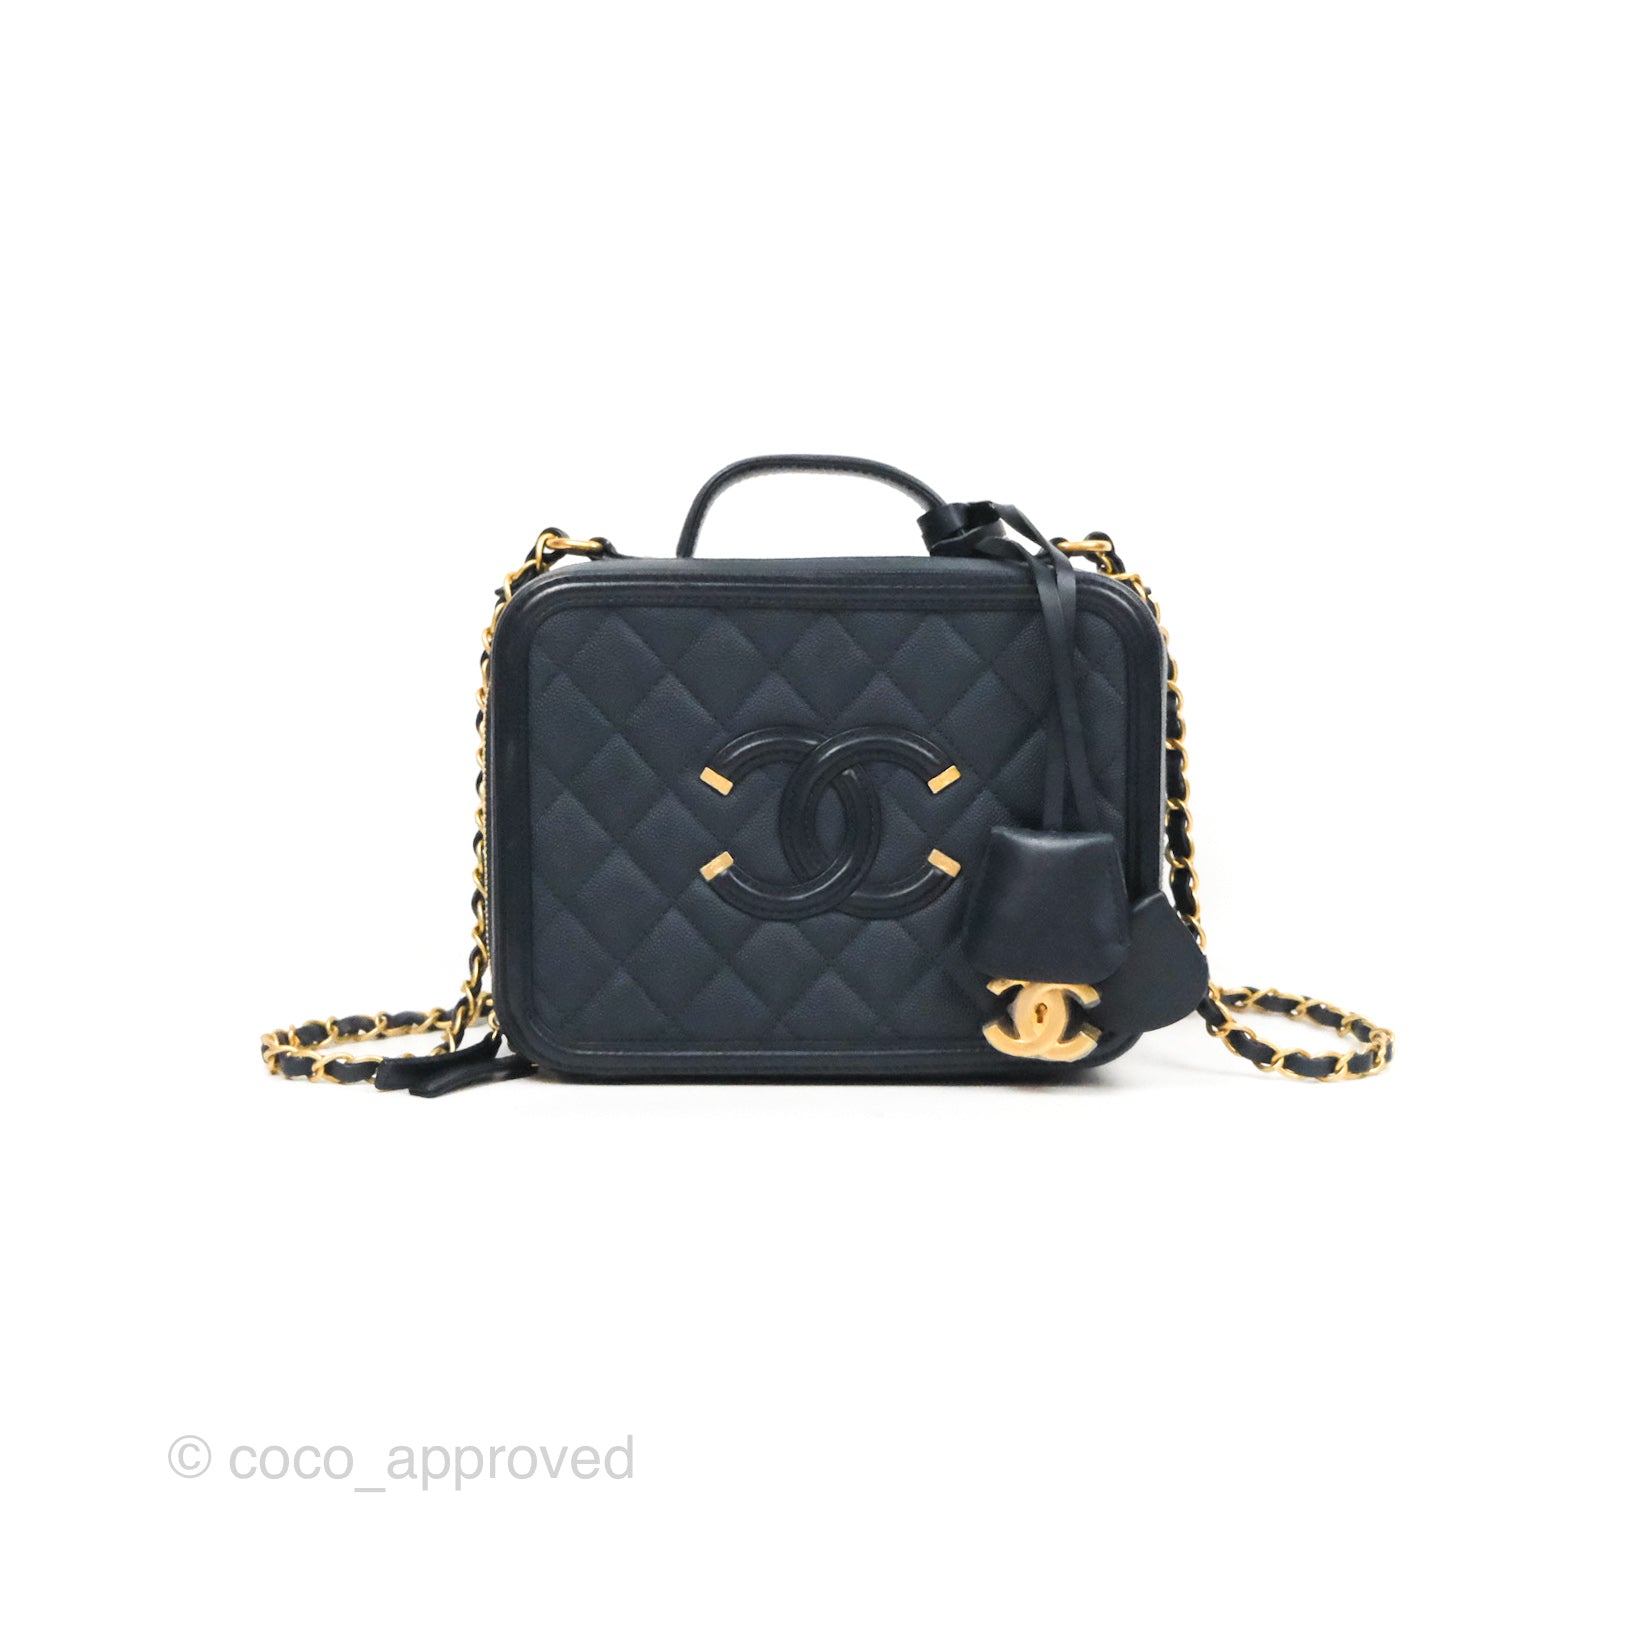 Authenticated Chanel CC Filigree Caviar Vanity Case Black Leather Bag